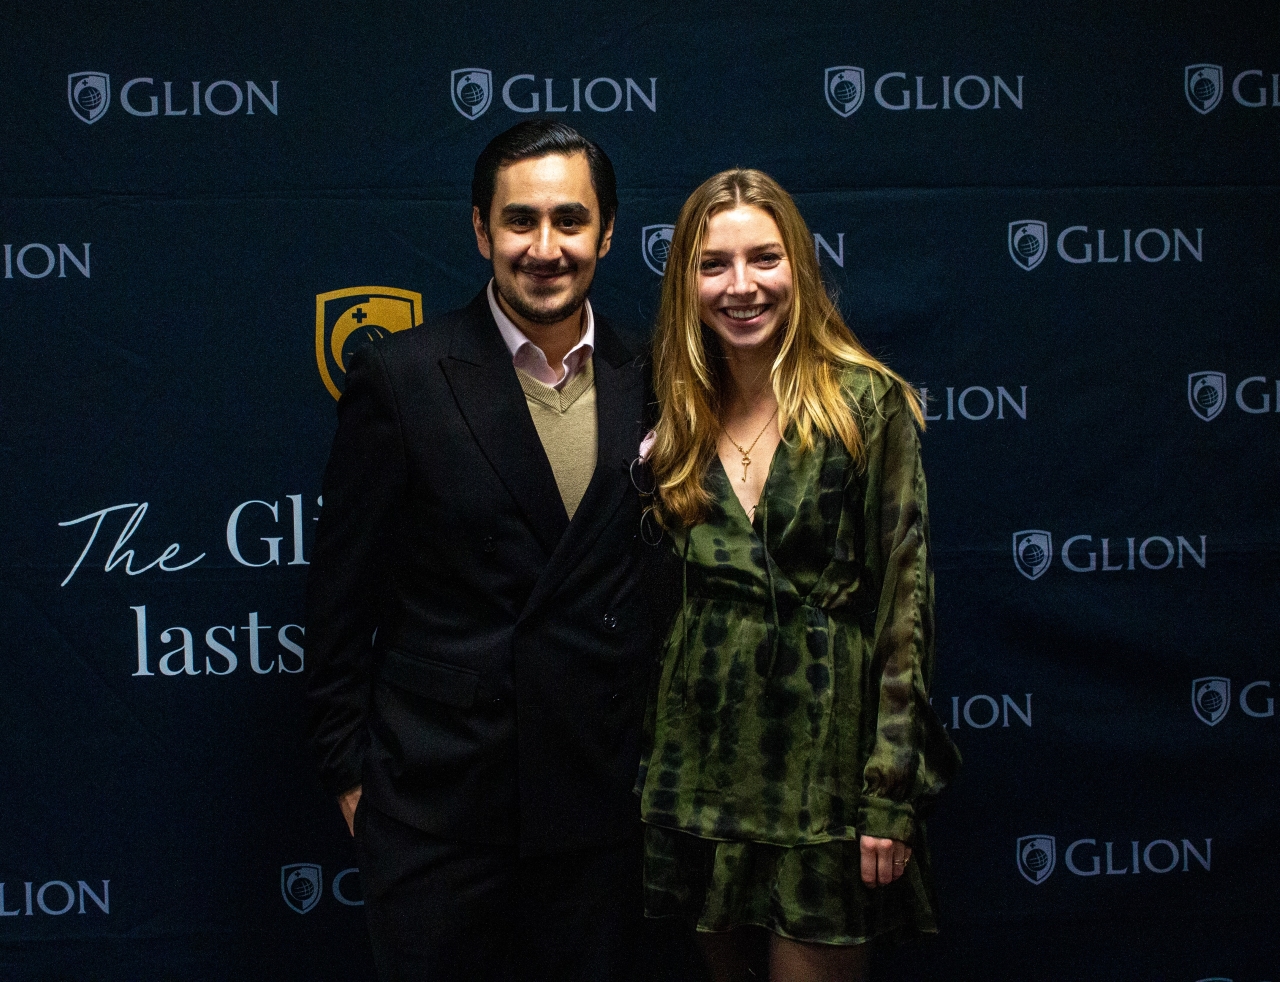 The Glion Alumni Association Accelerator: a resounding success in fostering entrepreneurship